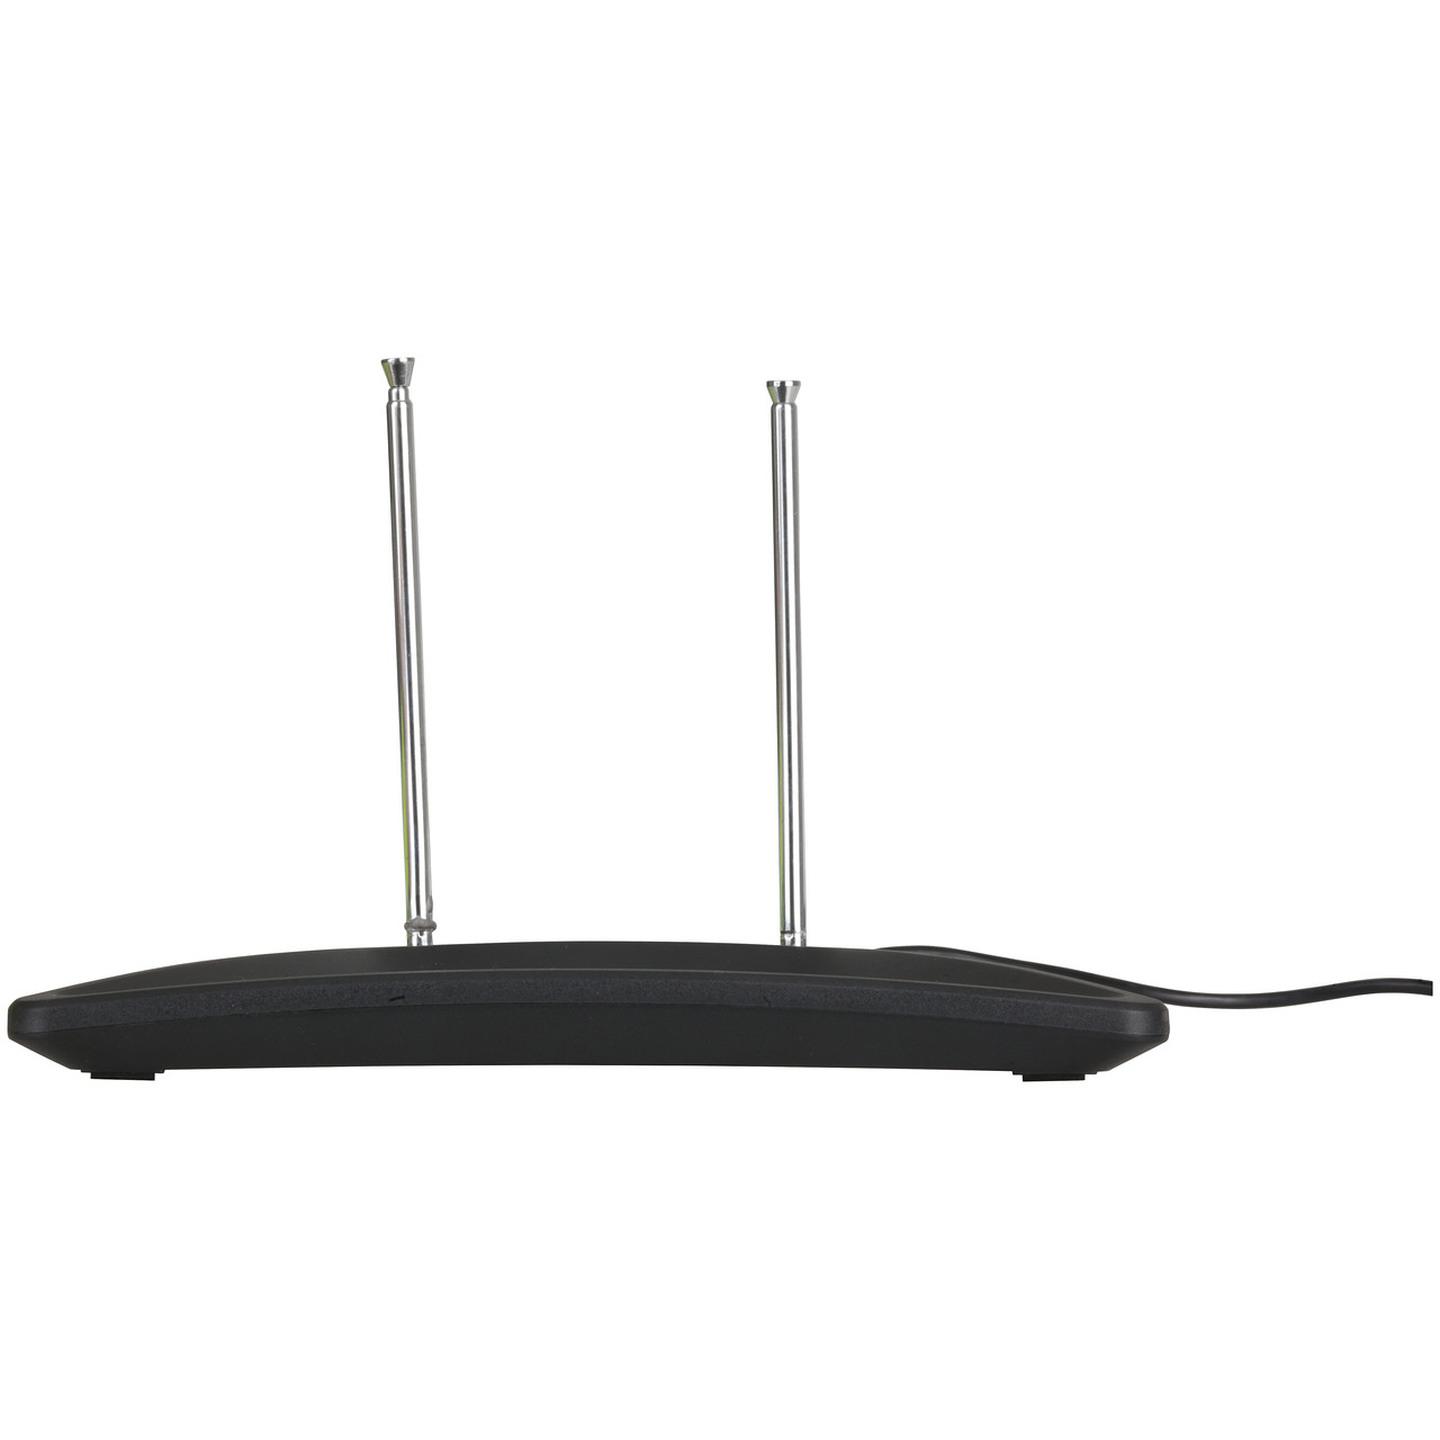 UHF/VHF Passive Indoor TV Antenna - Desk or Wall Mount